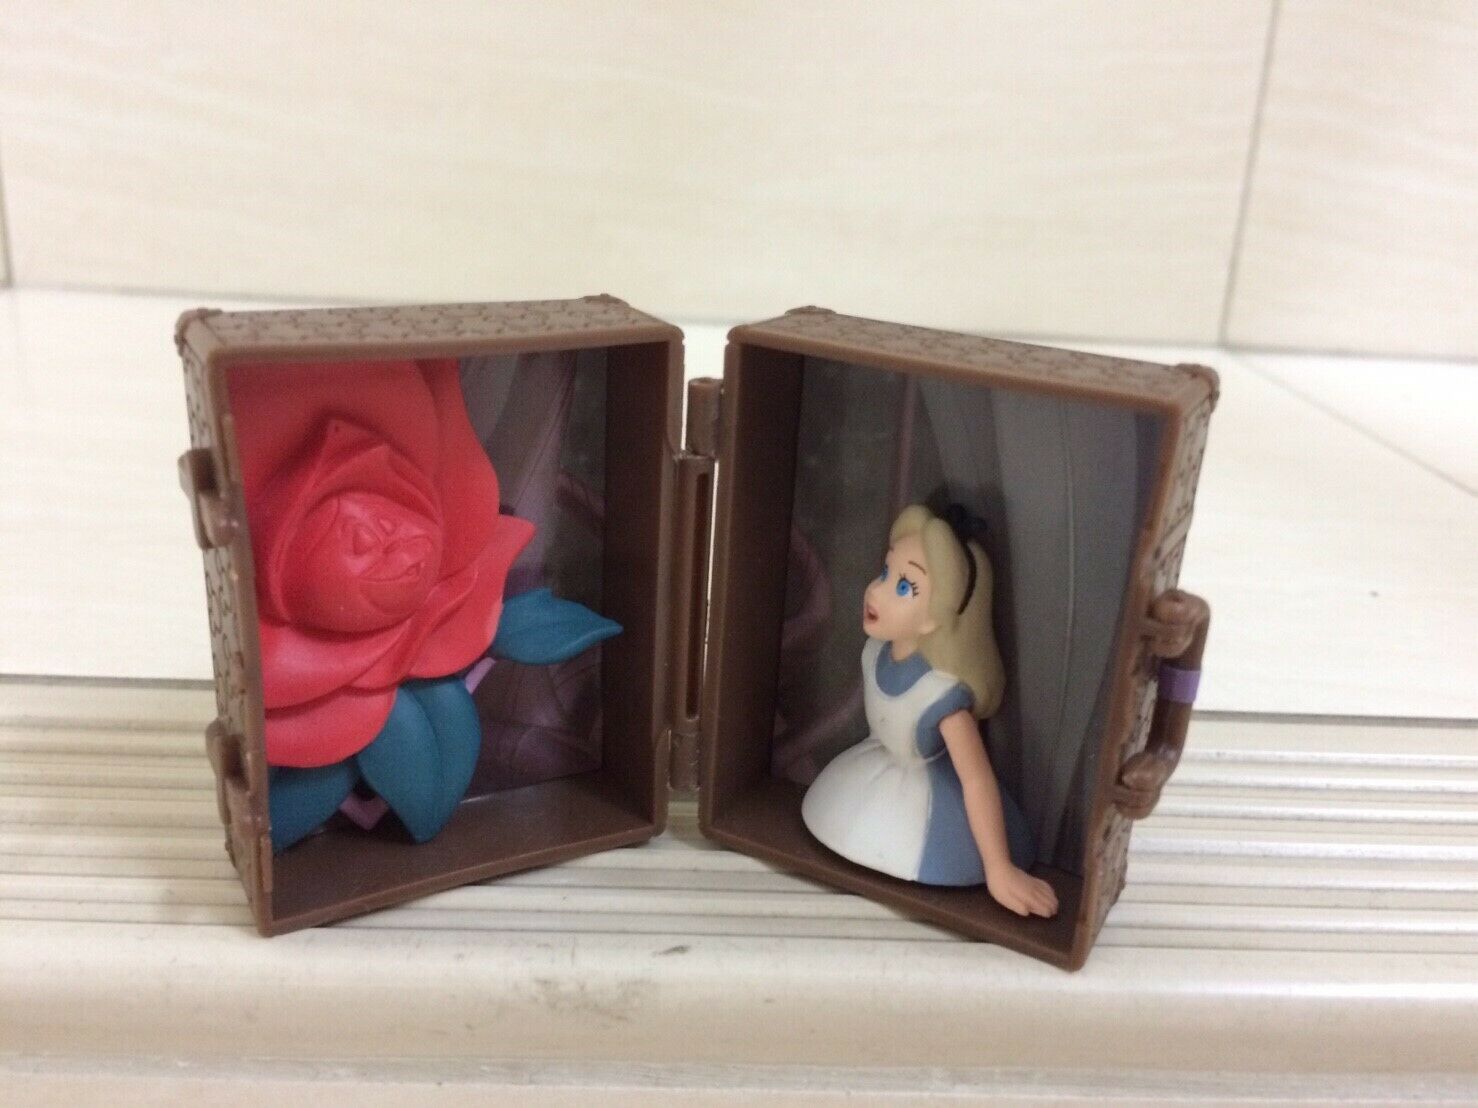 Disney Alice in Wonderland in Briefcase Figure Model. Classic Theme. Rare Item - $45.00